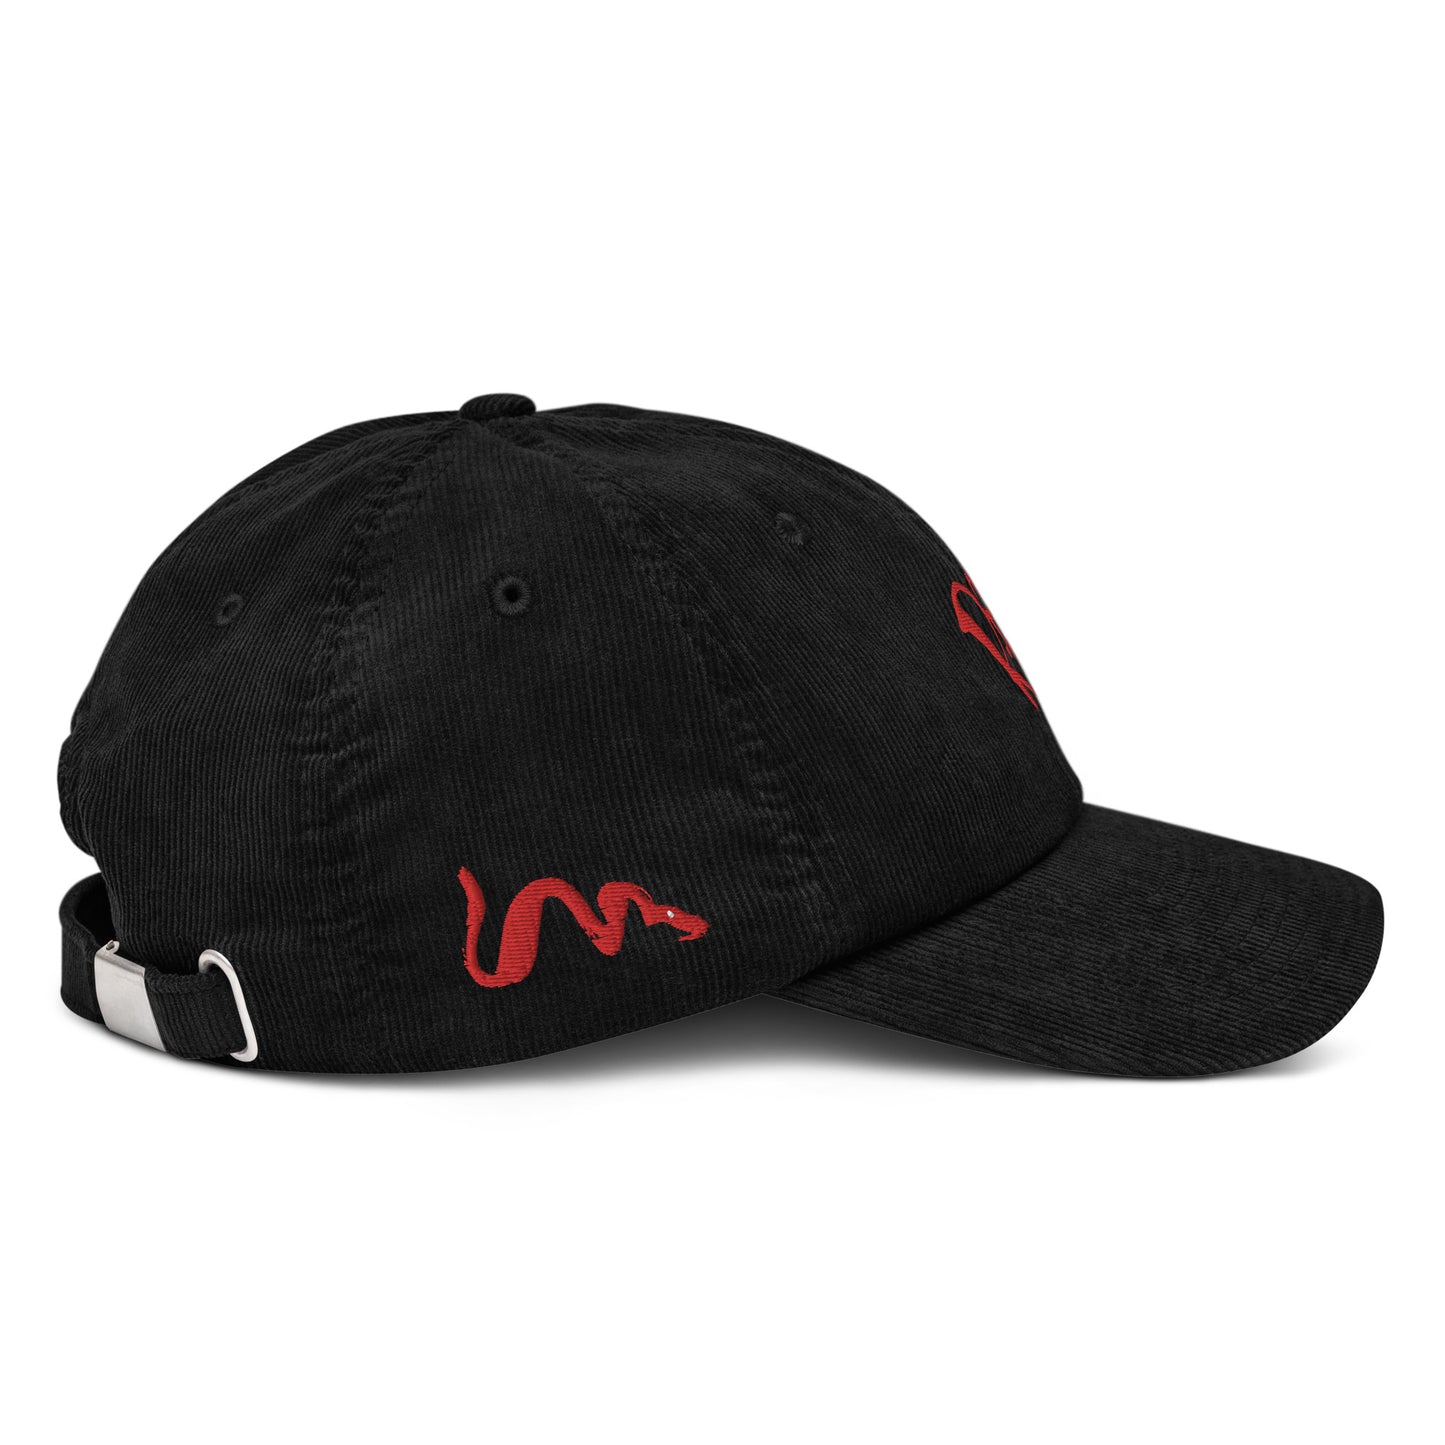 REHH - Corduroy hat (Black)